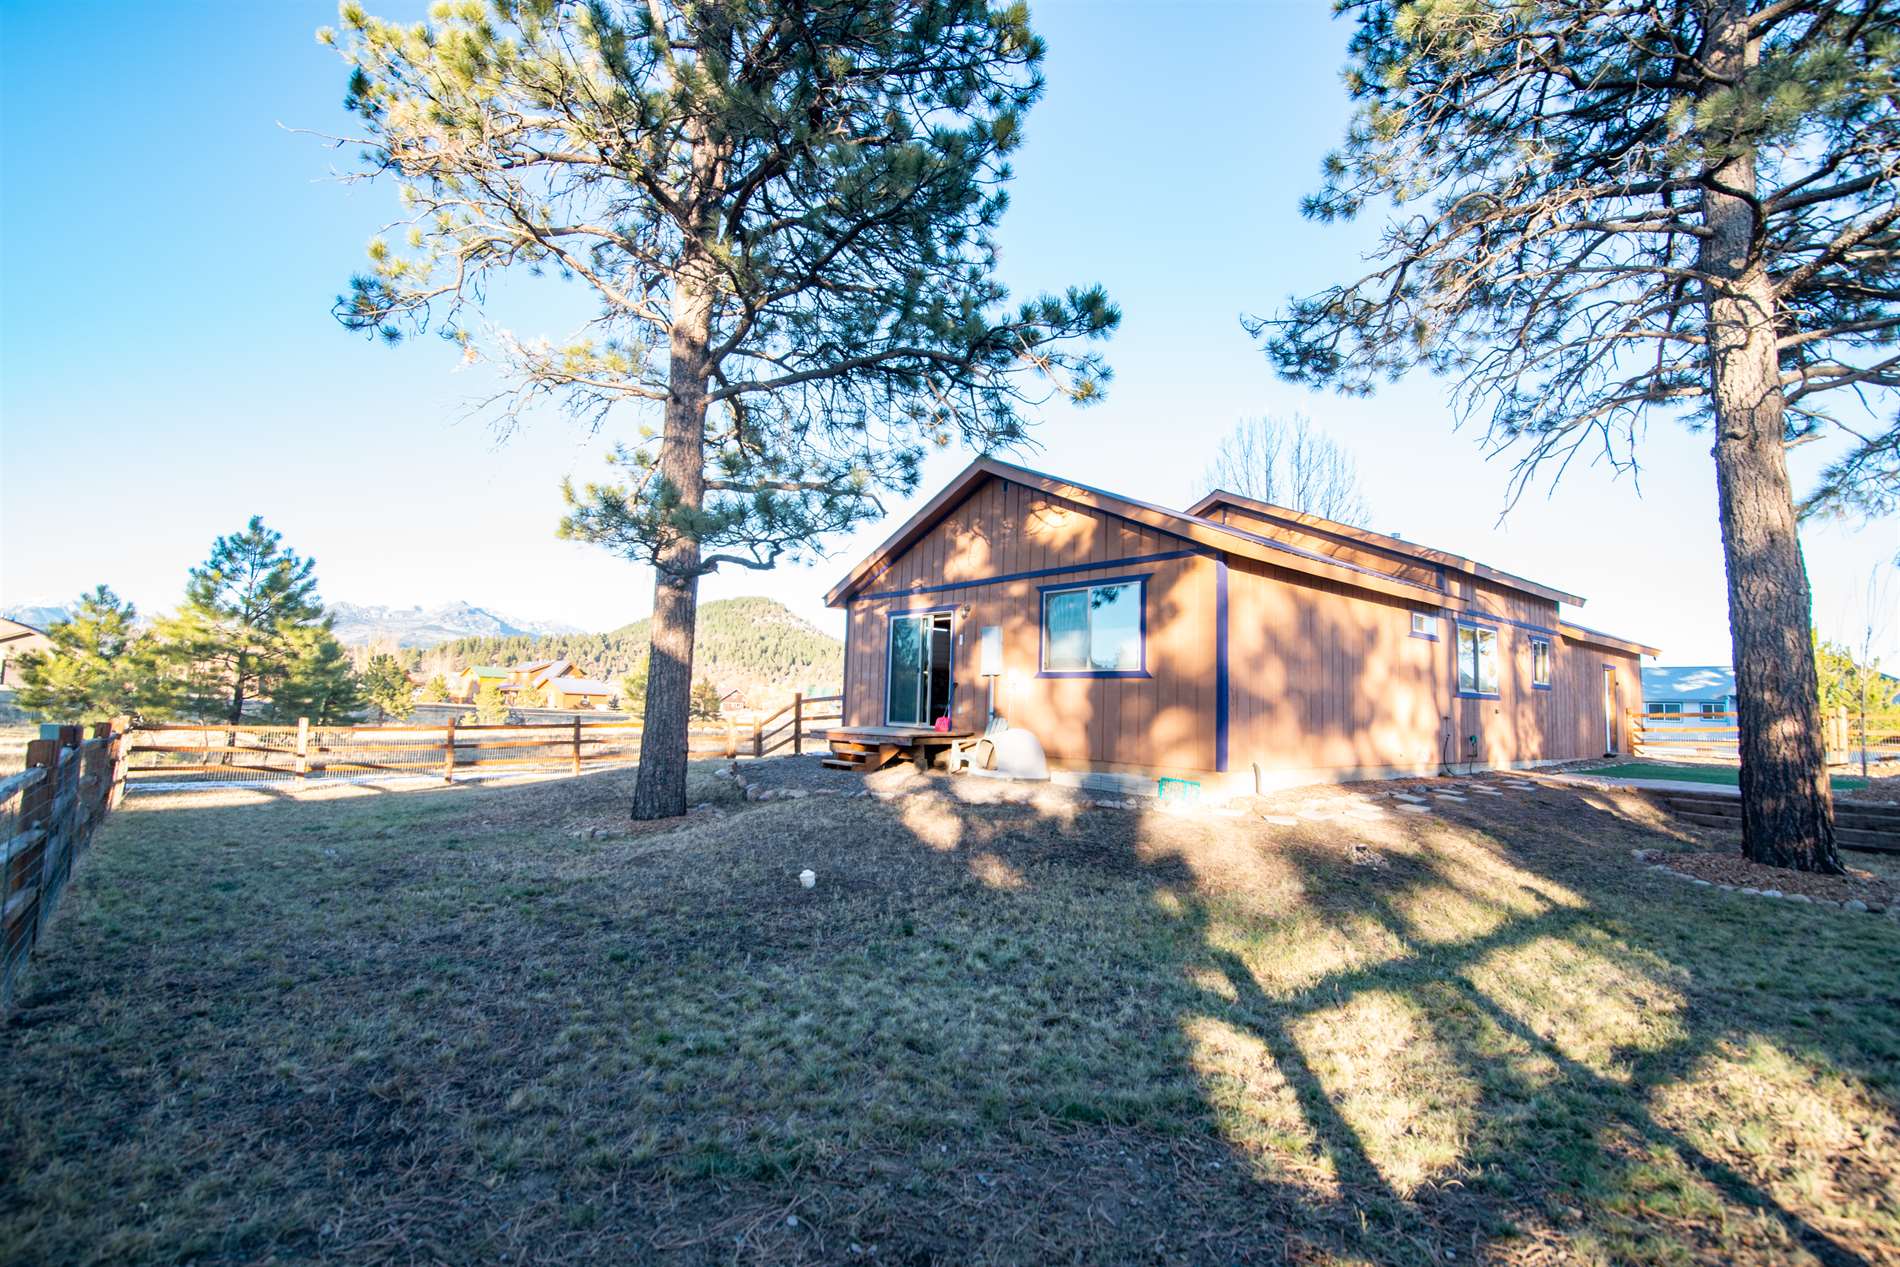 Mountain View Villa, #455 Saturn - Short Term, Pagosa Springs, CO 81147